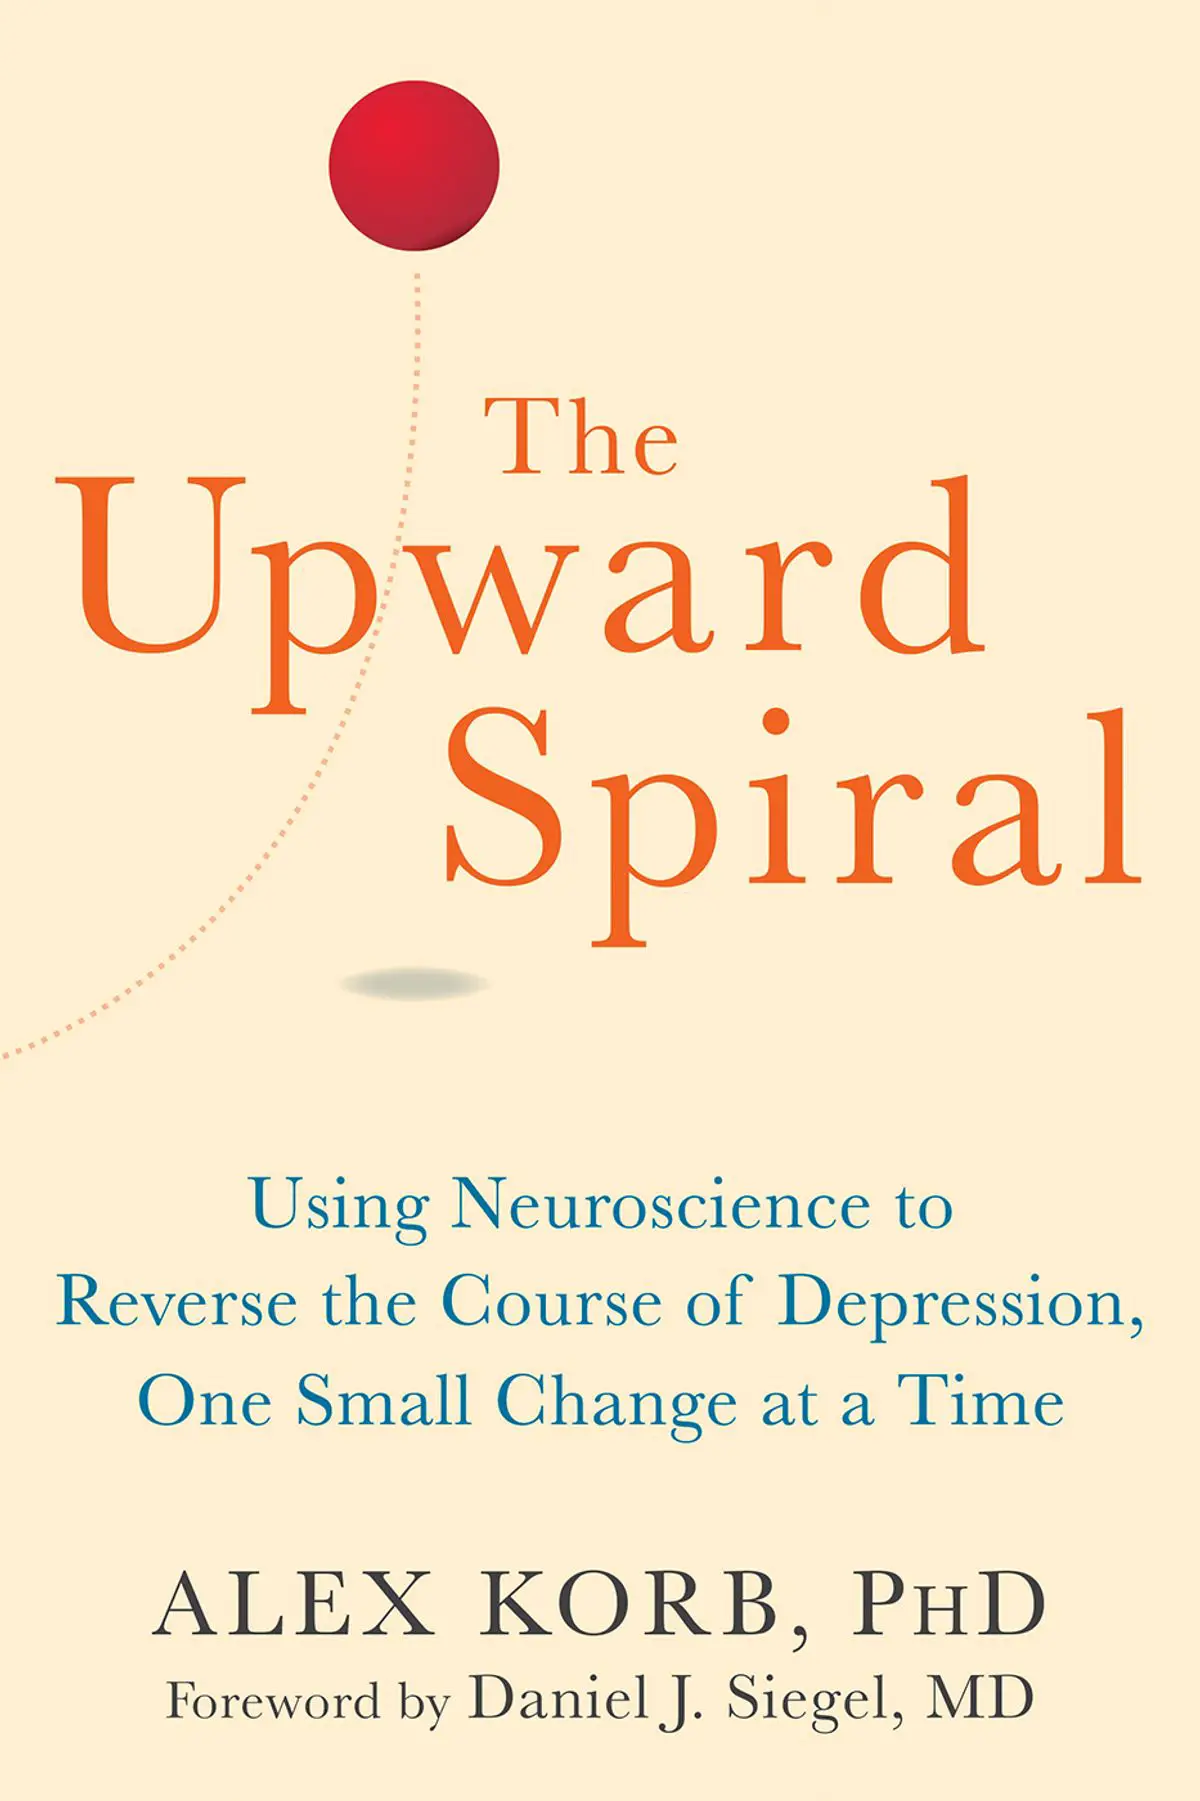 [Download] The Upward Spiral by Alex Korb PhD  pdf book